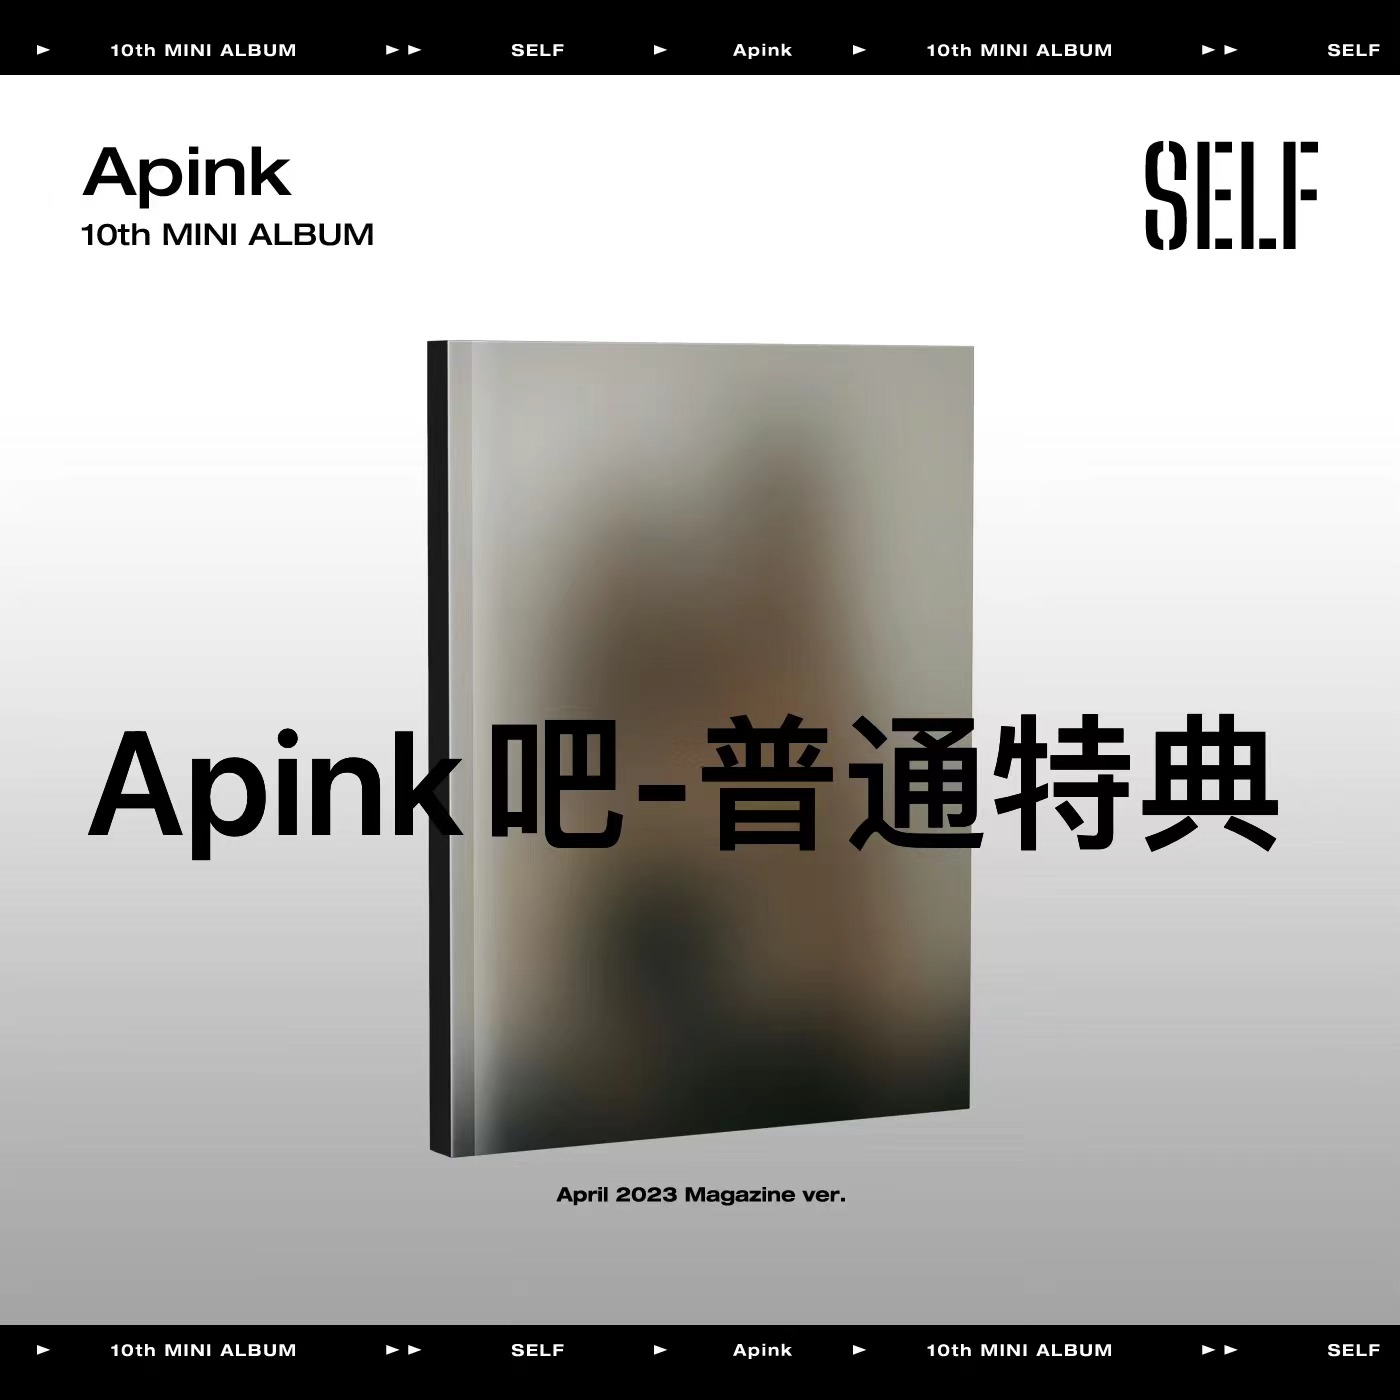 [全款 普通特典专] [Ktown4u Special Gift] Apink - 迷你10辑 [SELF] (April 2023 Magazine Ver.)_APINK吧官博